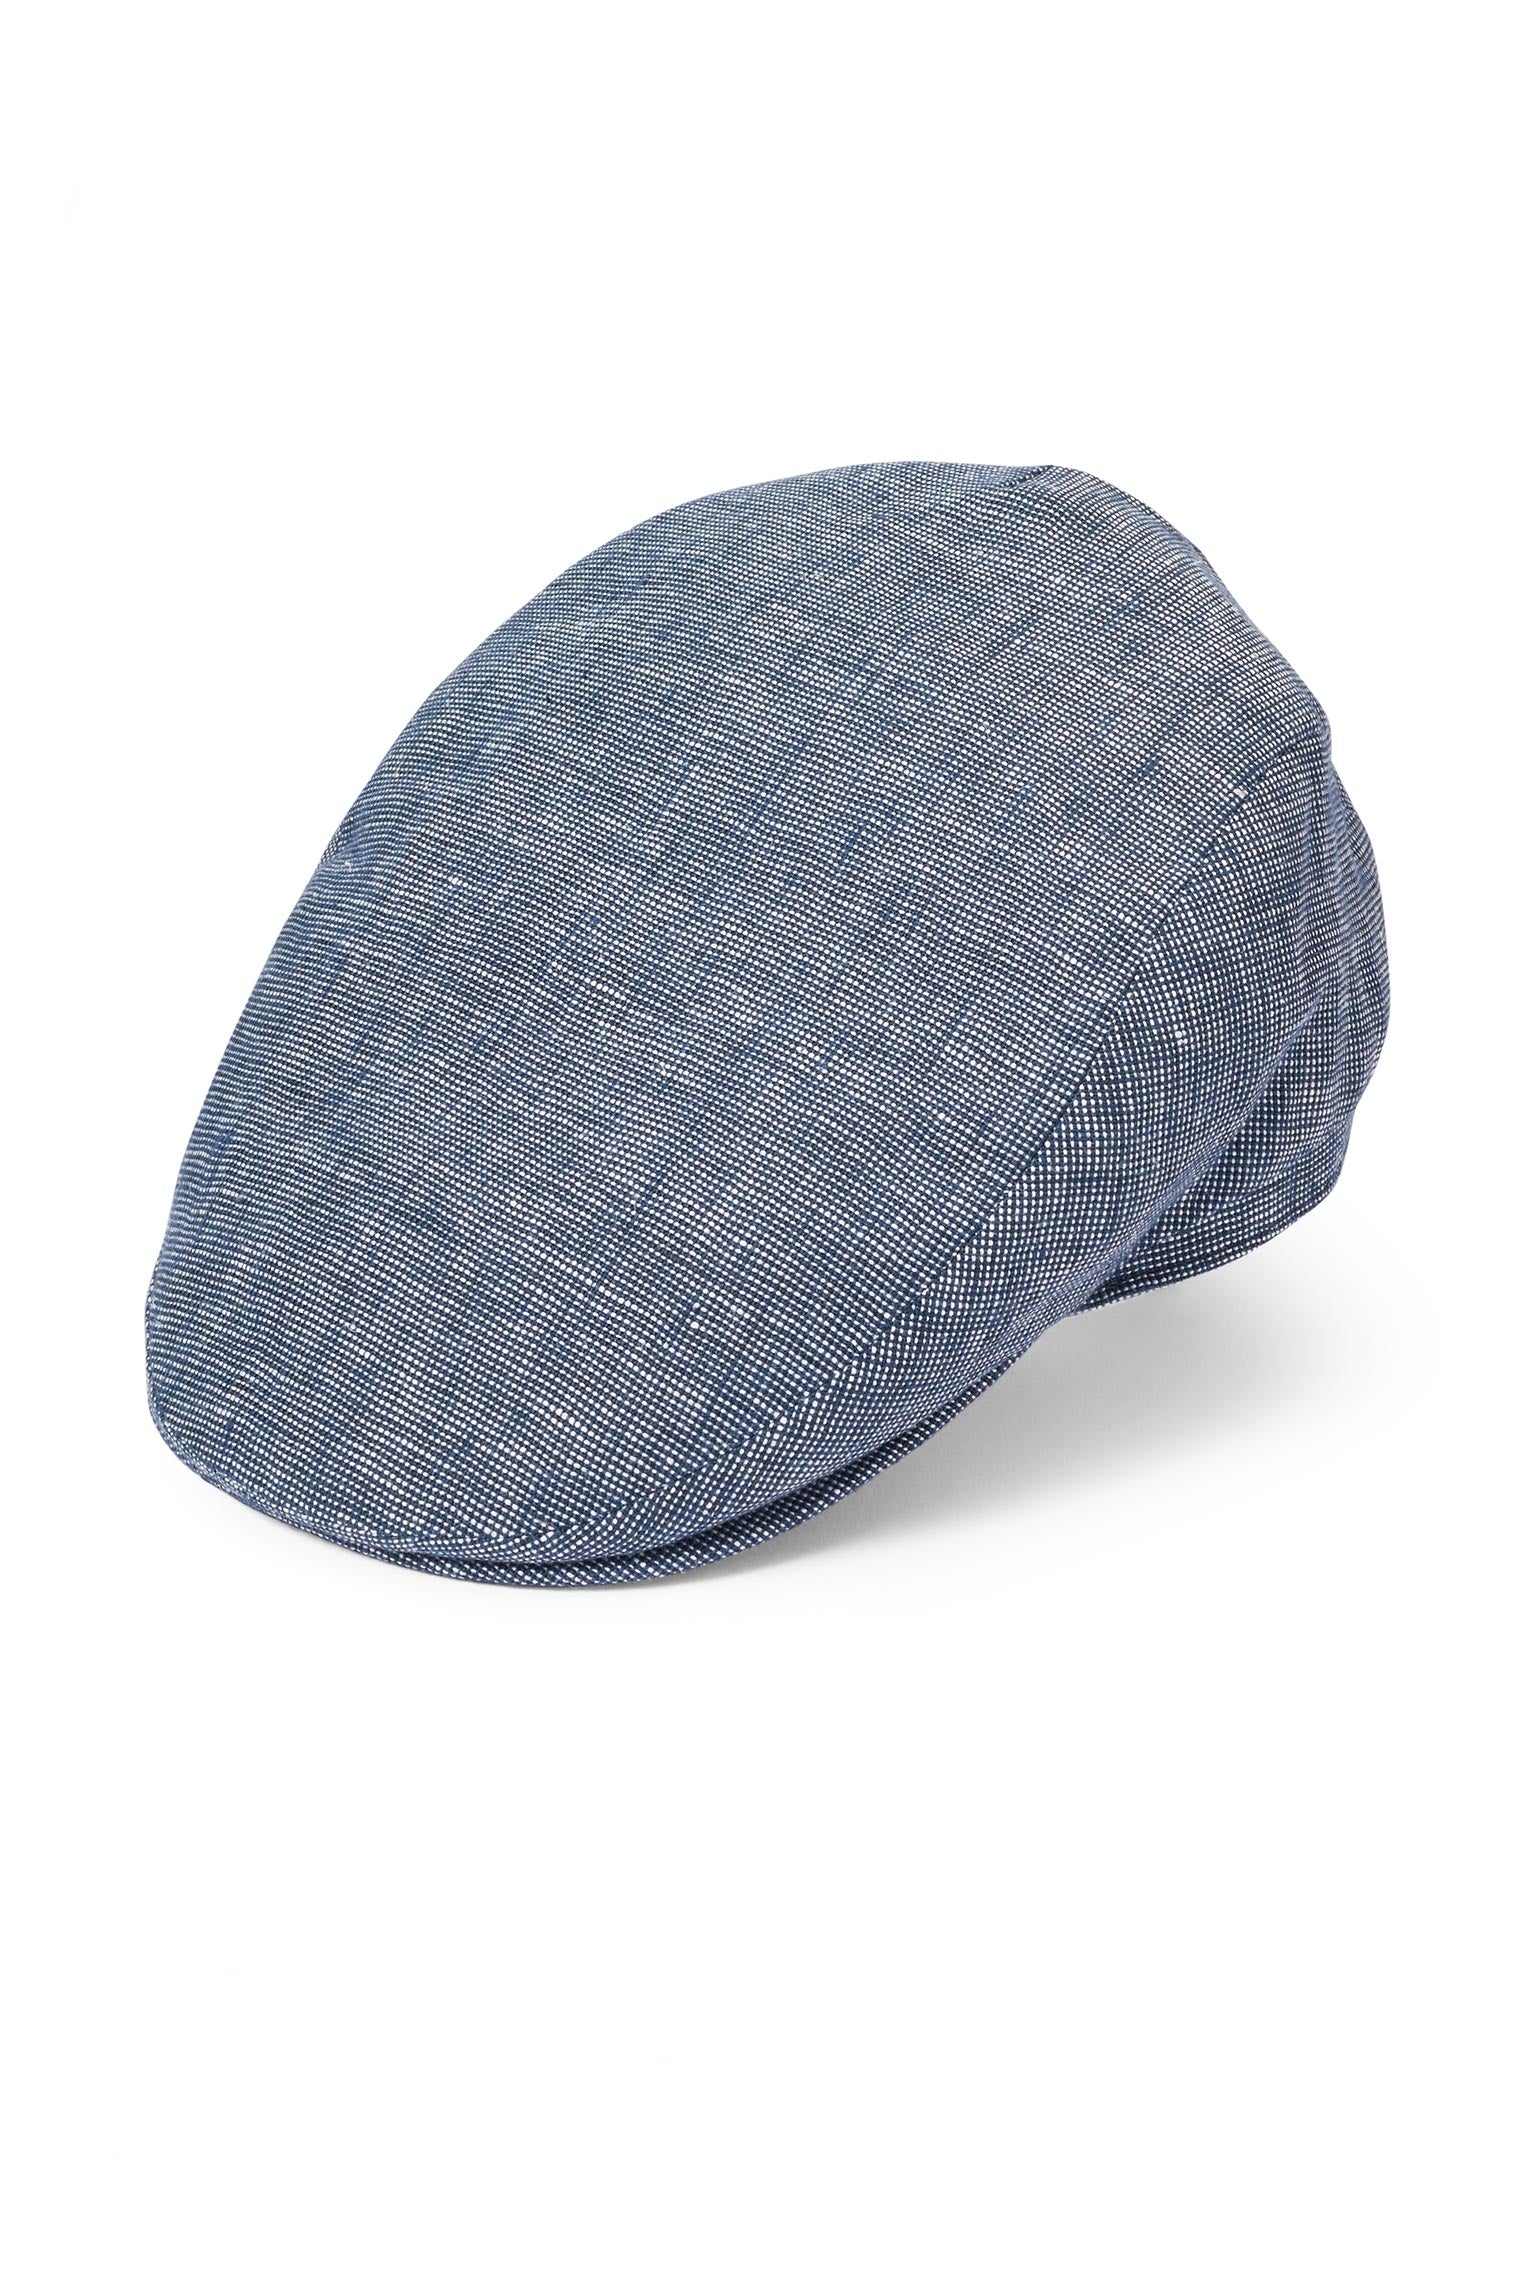 Summer Grosvenor Blue Flat Cap - New Season Men's Hats - Lock & Co. Hatters London UK